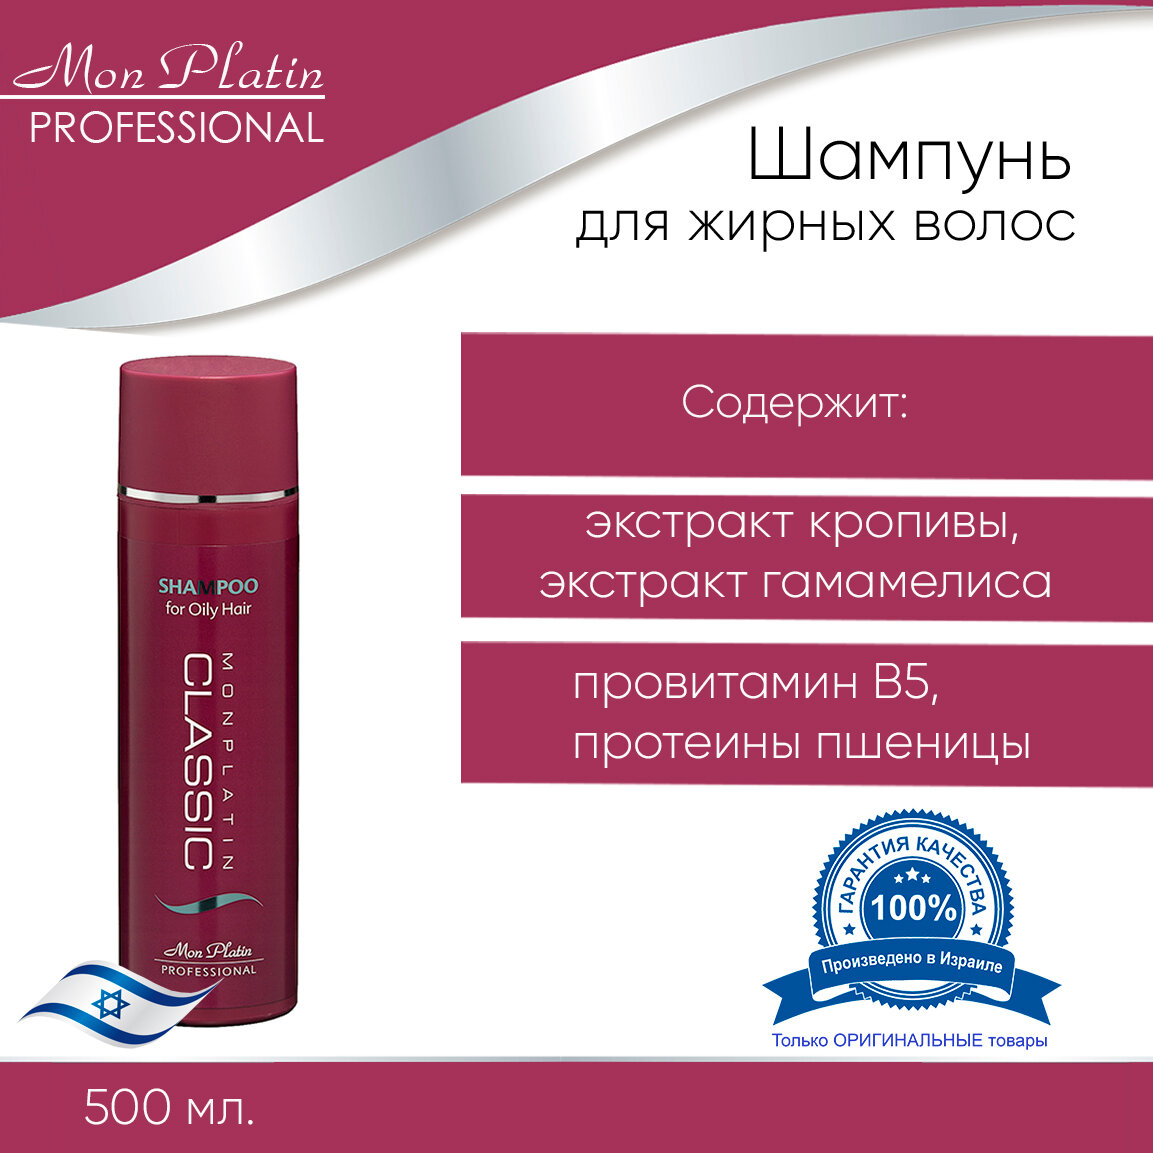 Mon Platin Professional Шампунь для жирных волос "Classic" 500 мл. MP 580